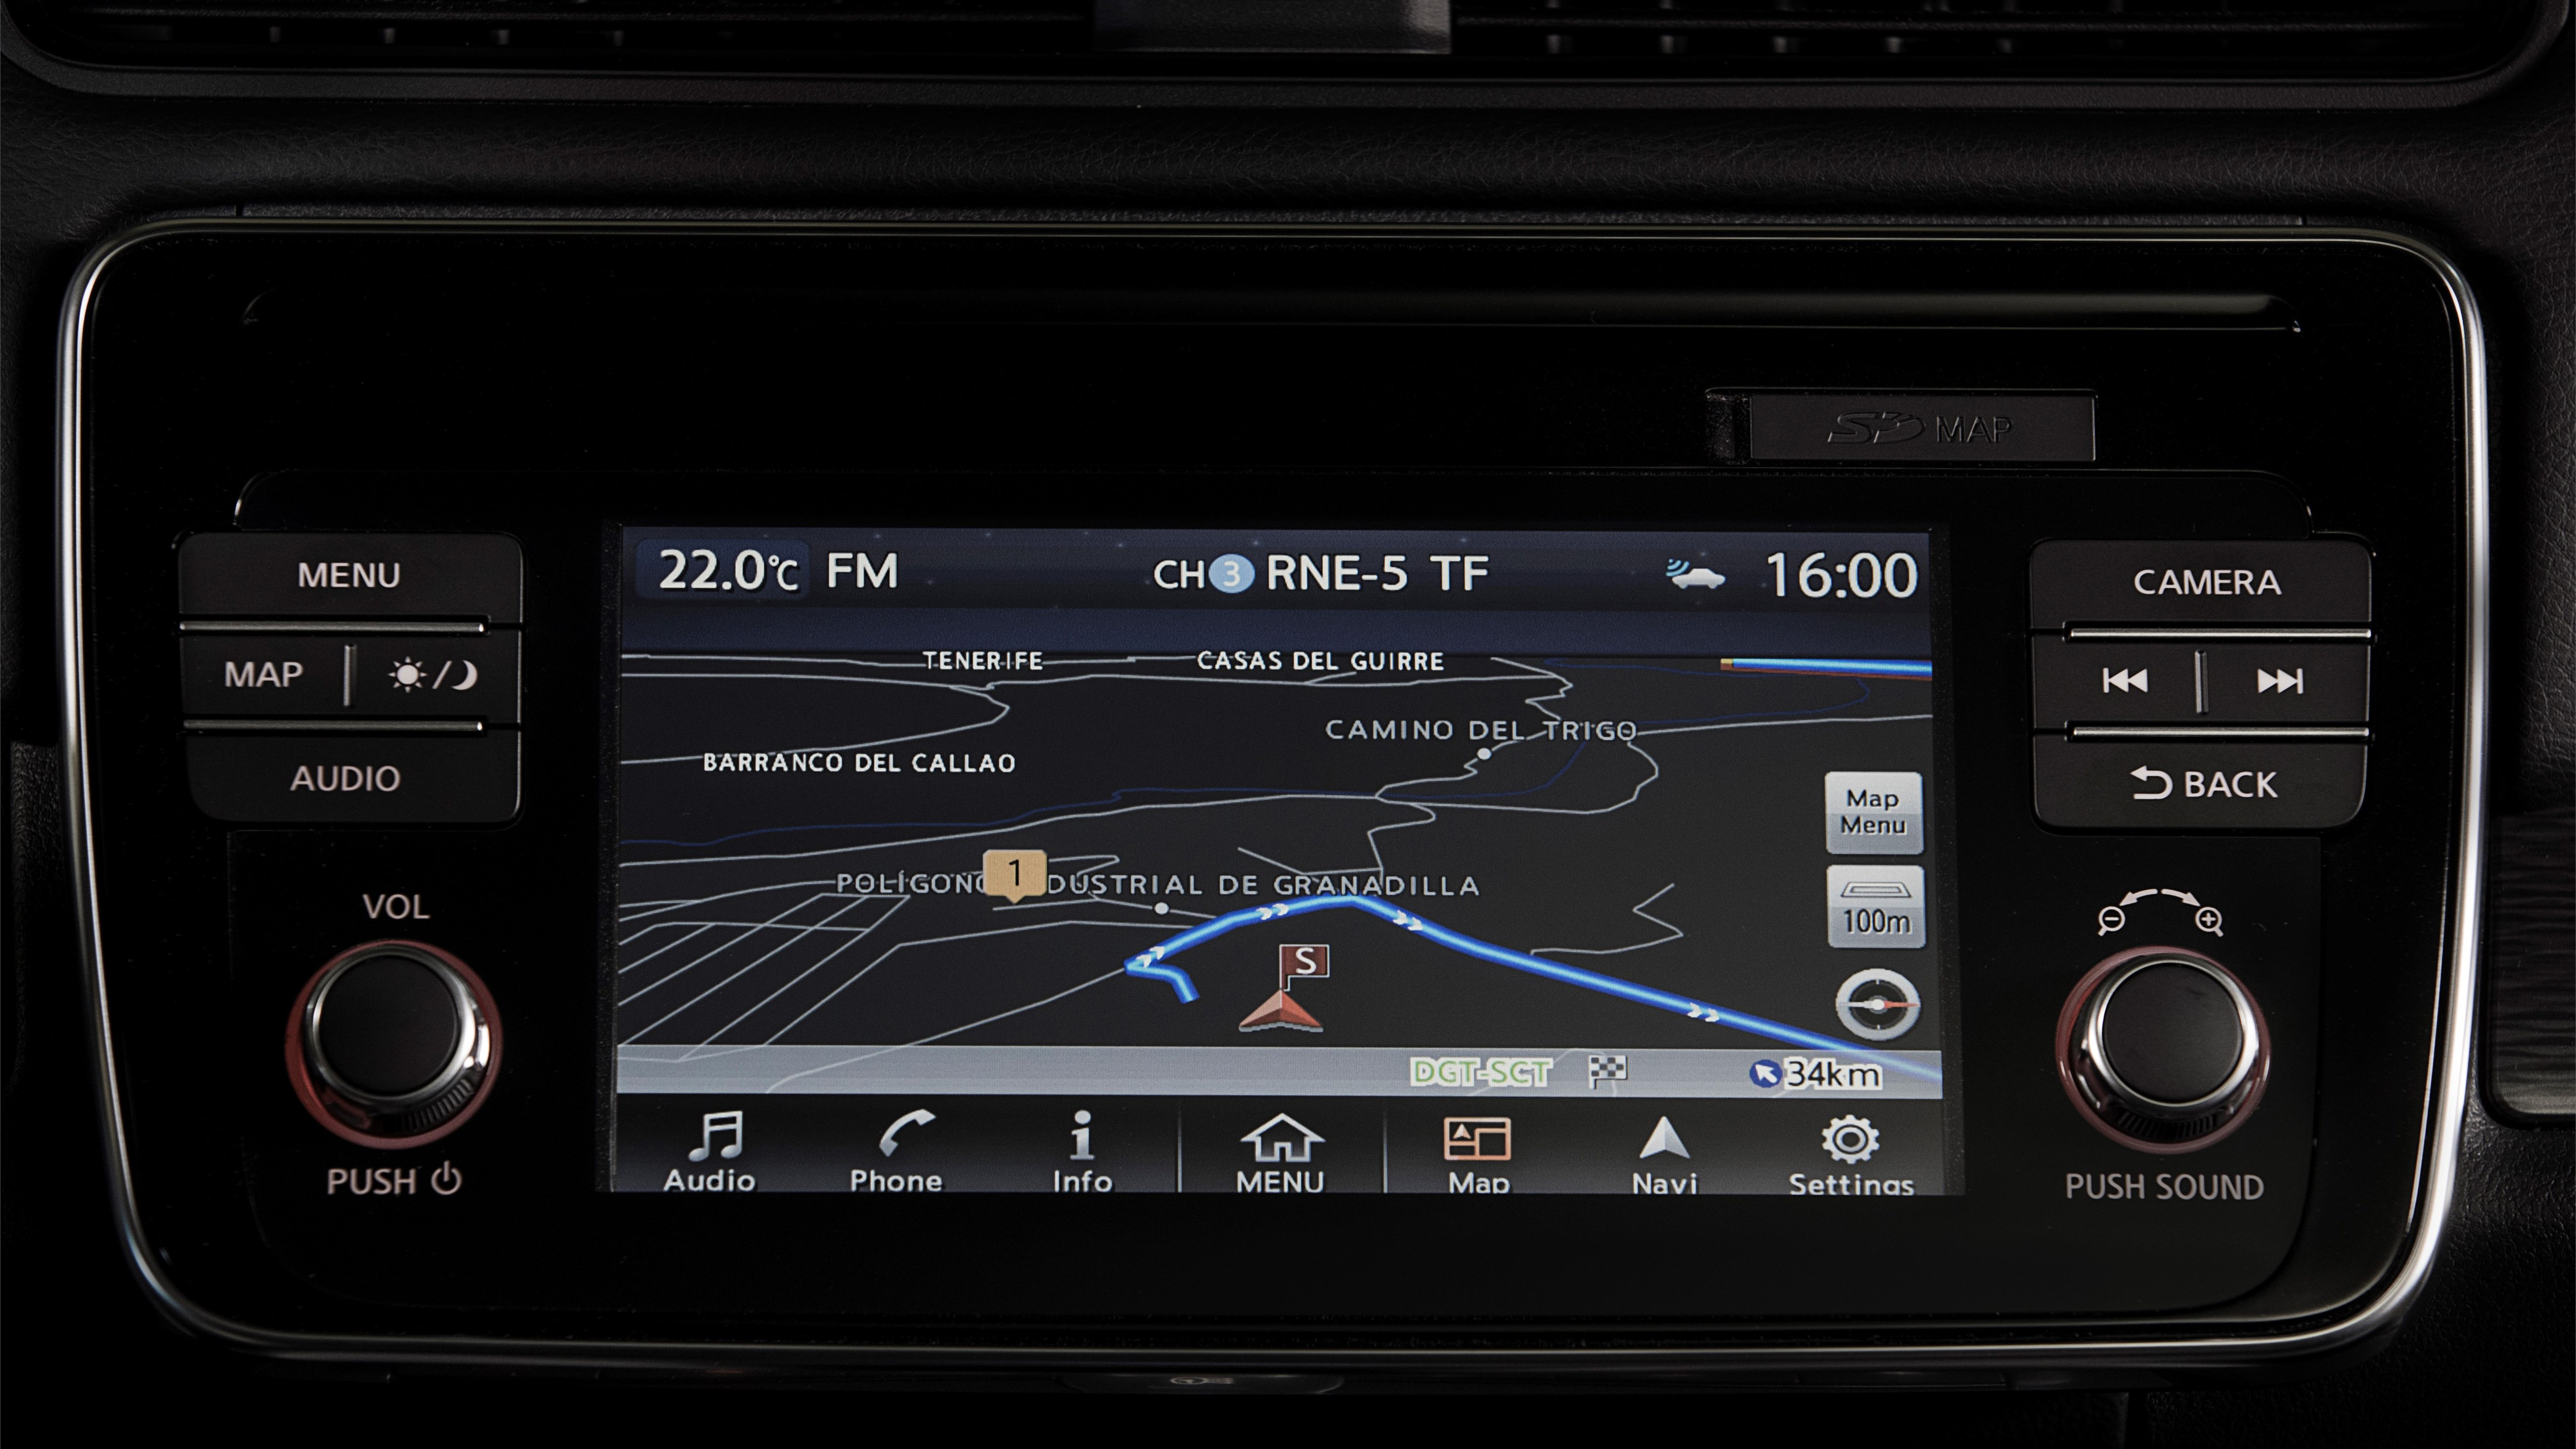 Navigation in the new Nissan Leaf